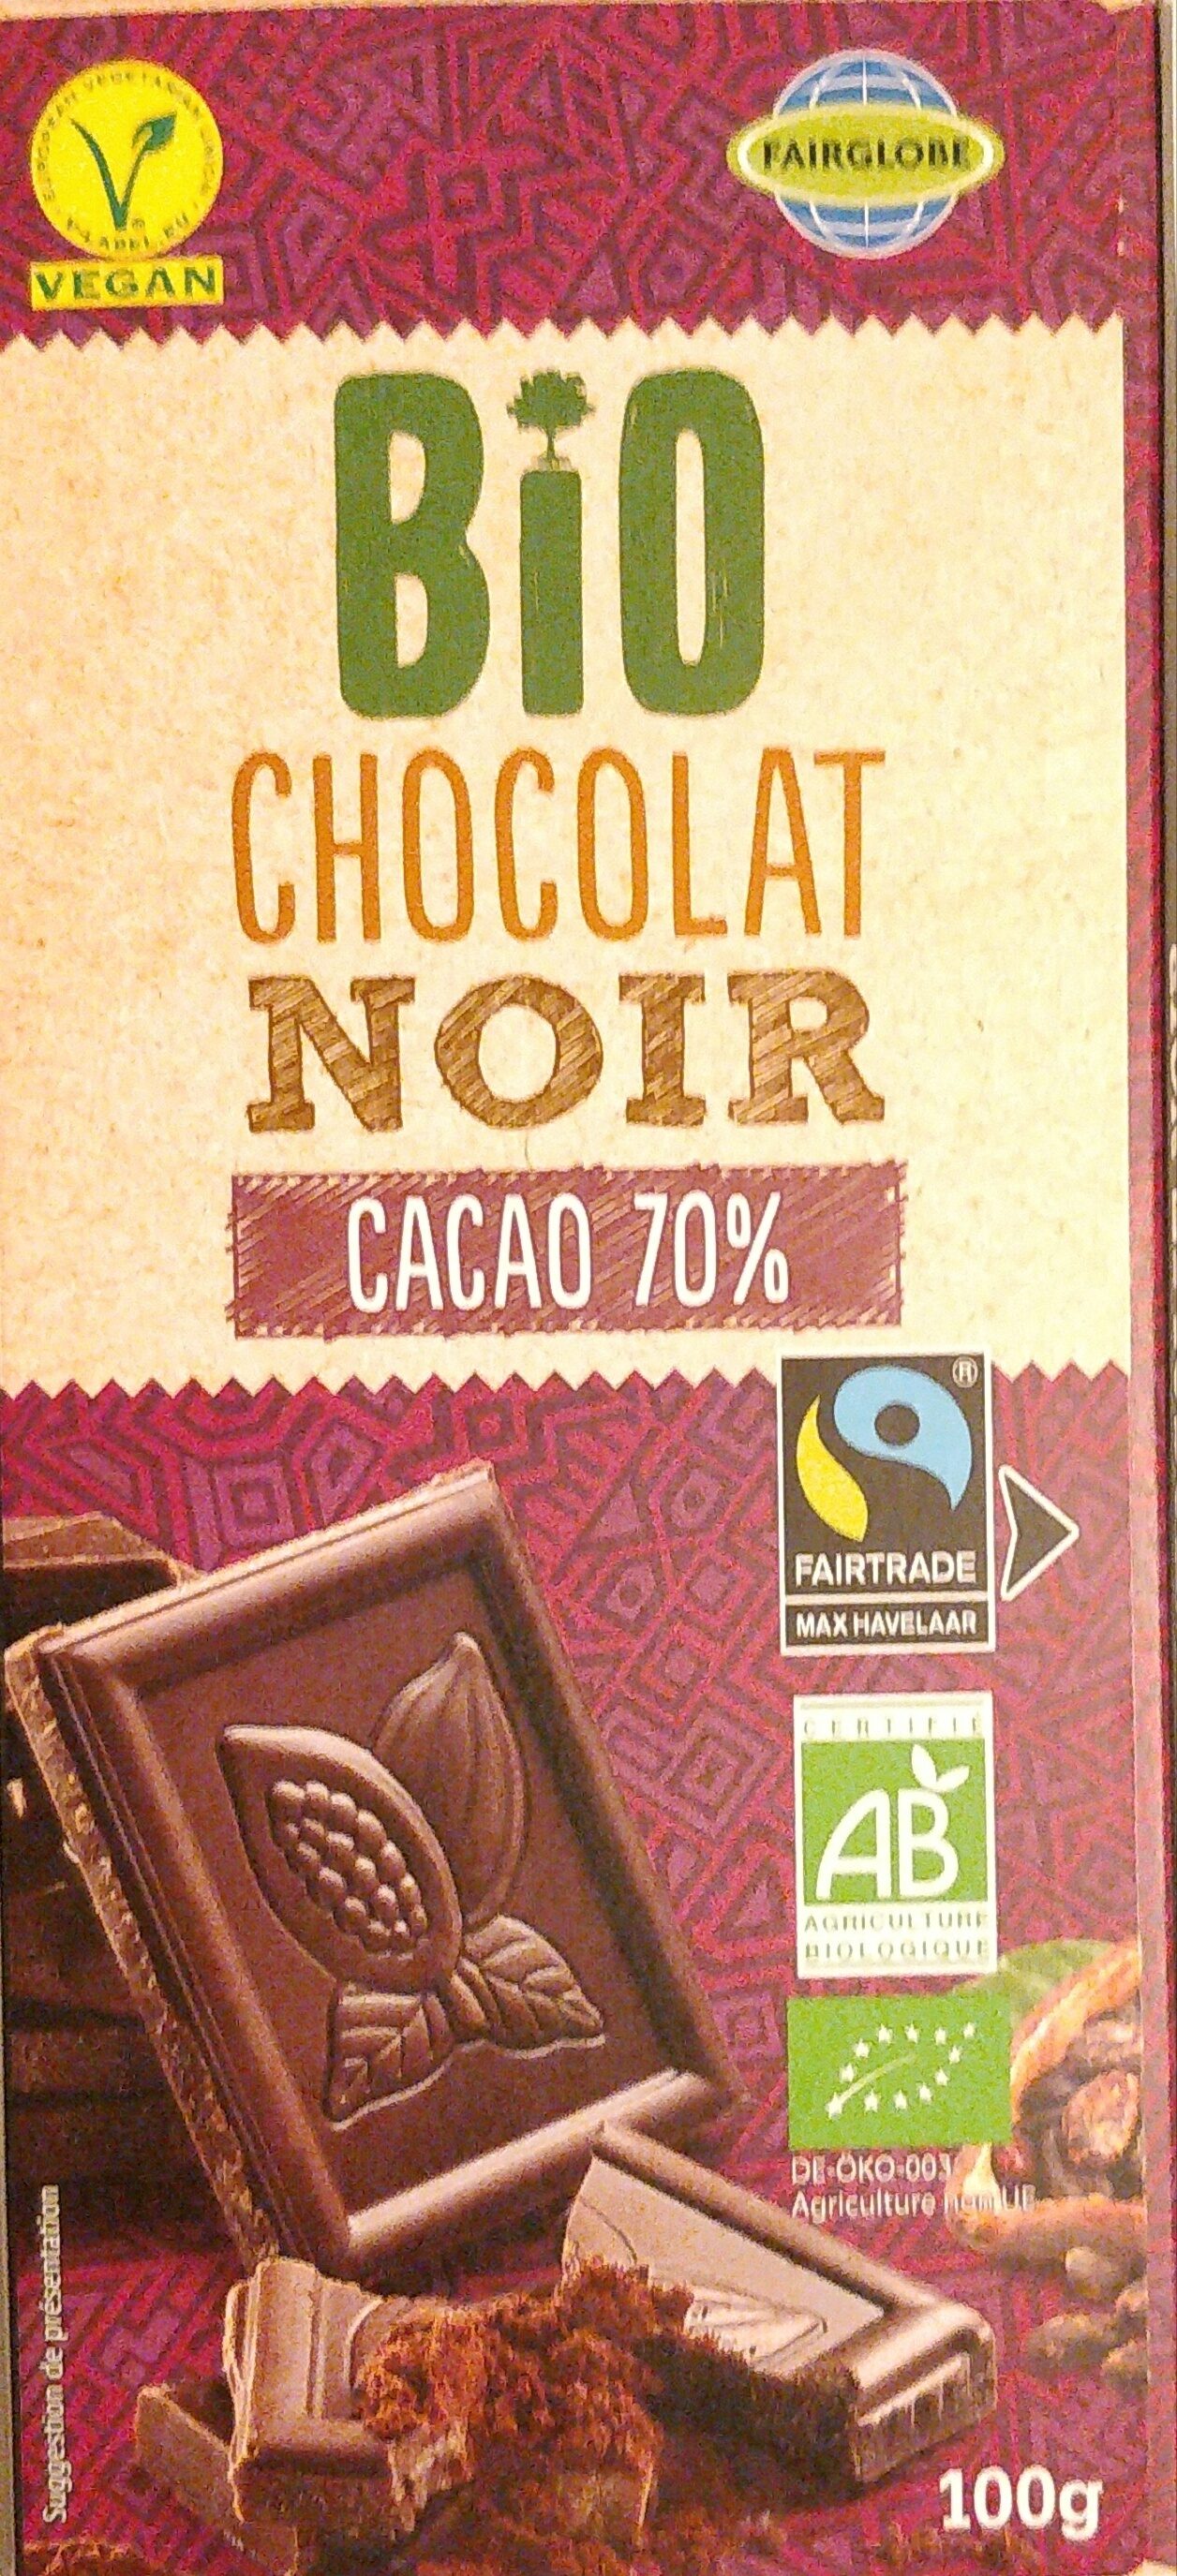 Chocolat noir bio cacao 70% - Produit